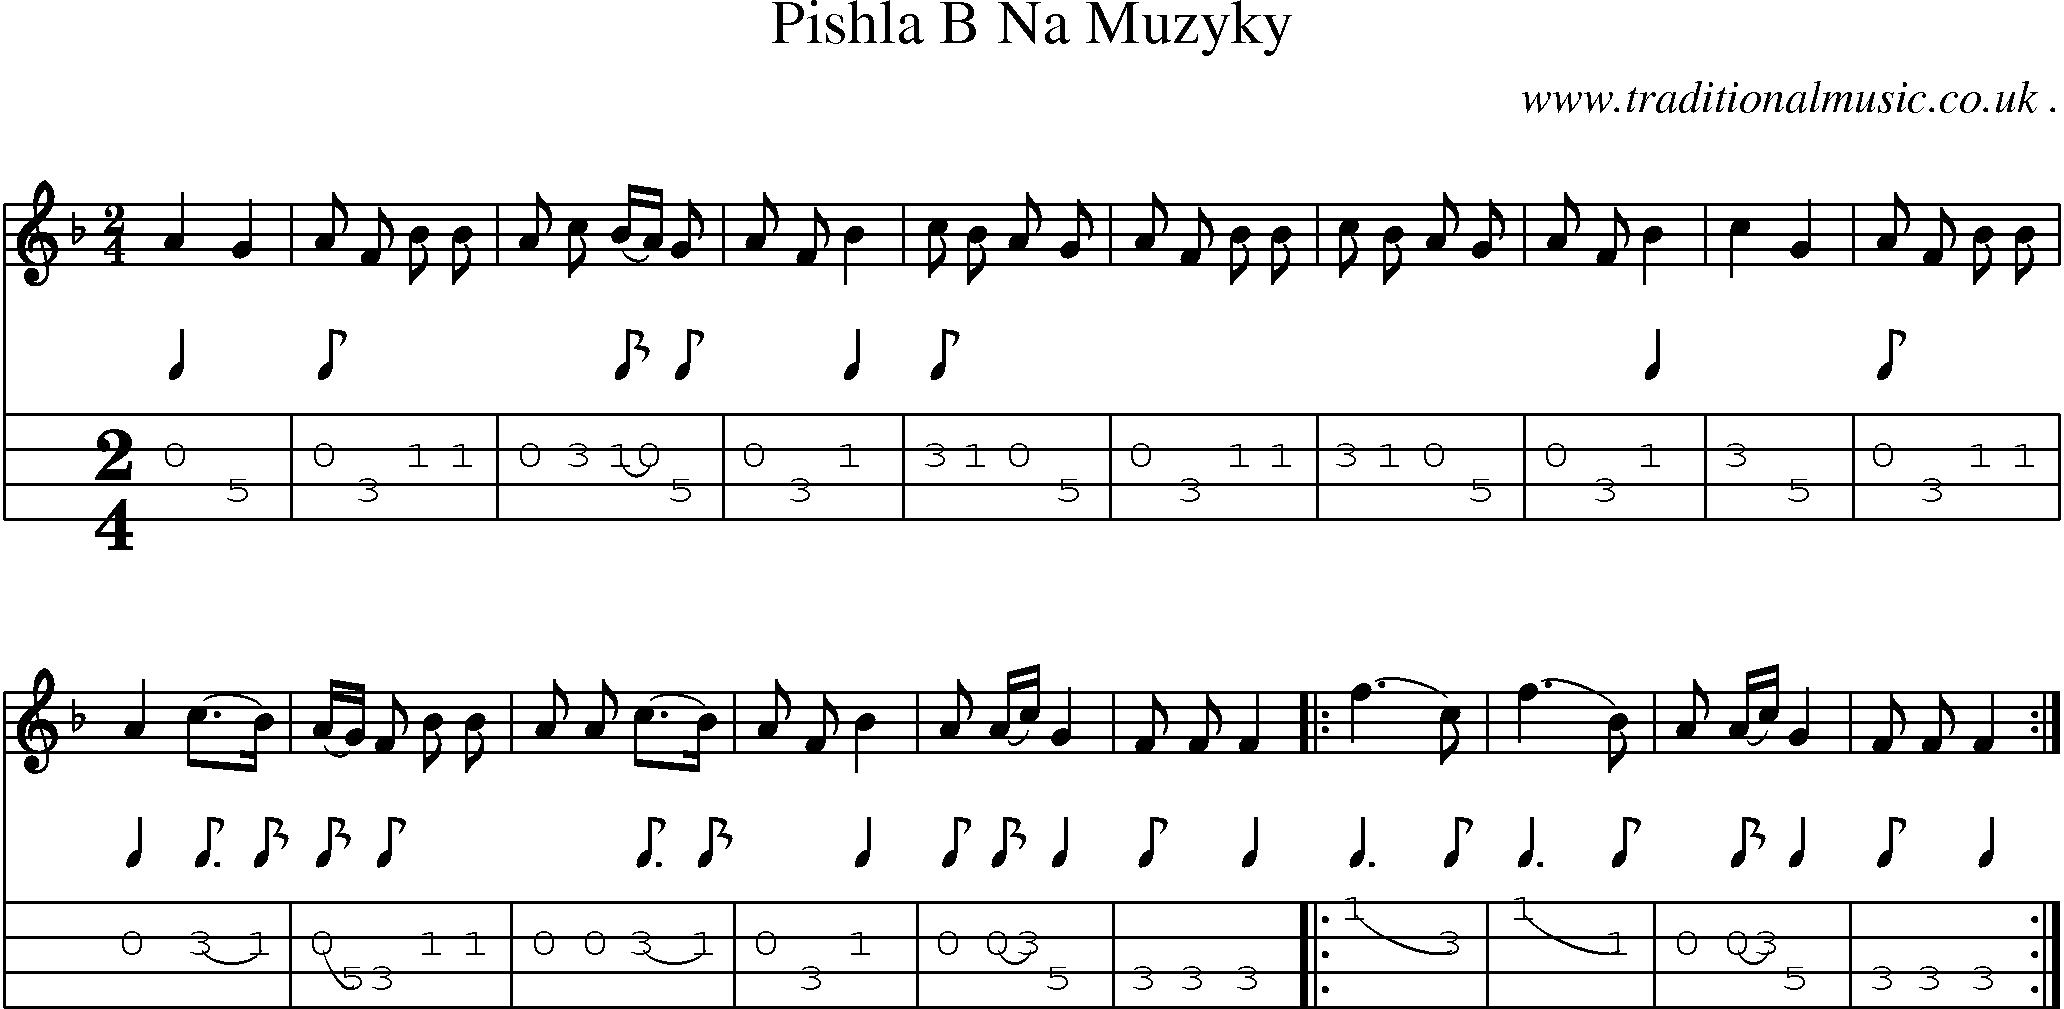 Sheet-Music and Mandolin Tabs for Pishla B Na Muzyky